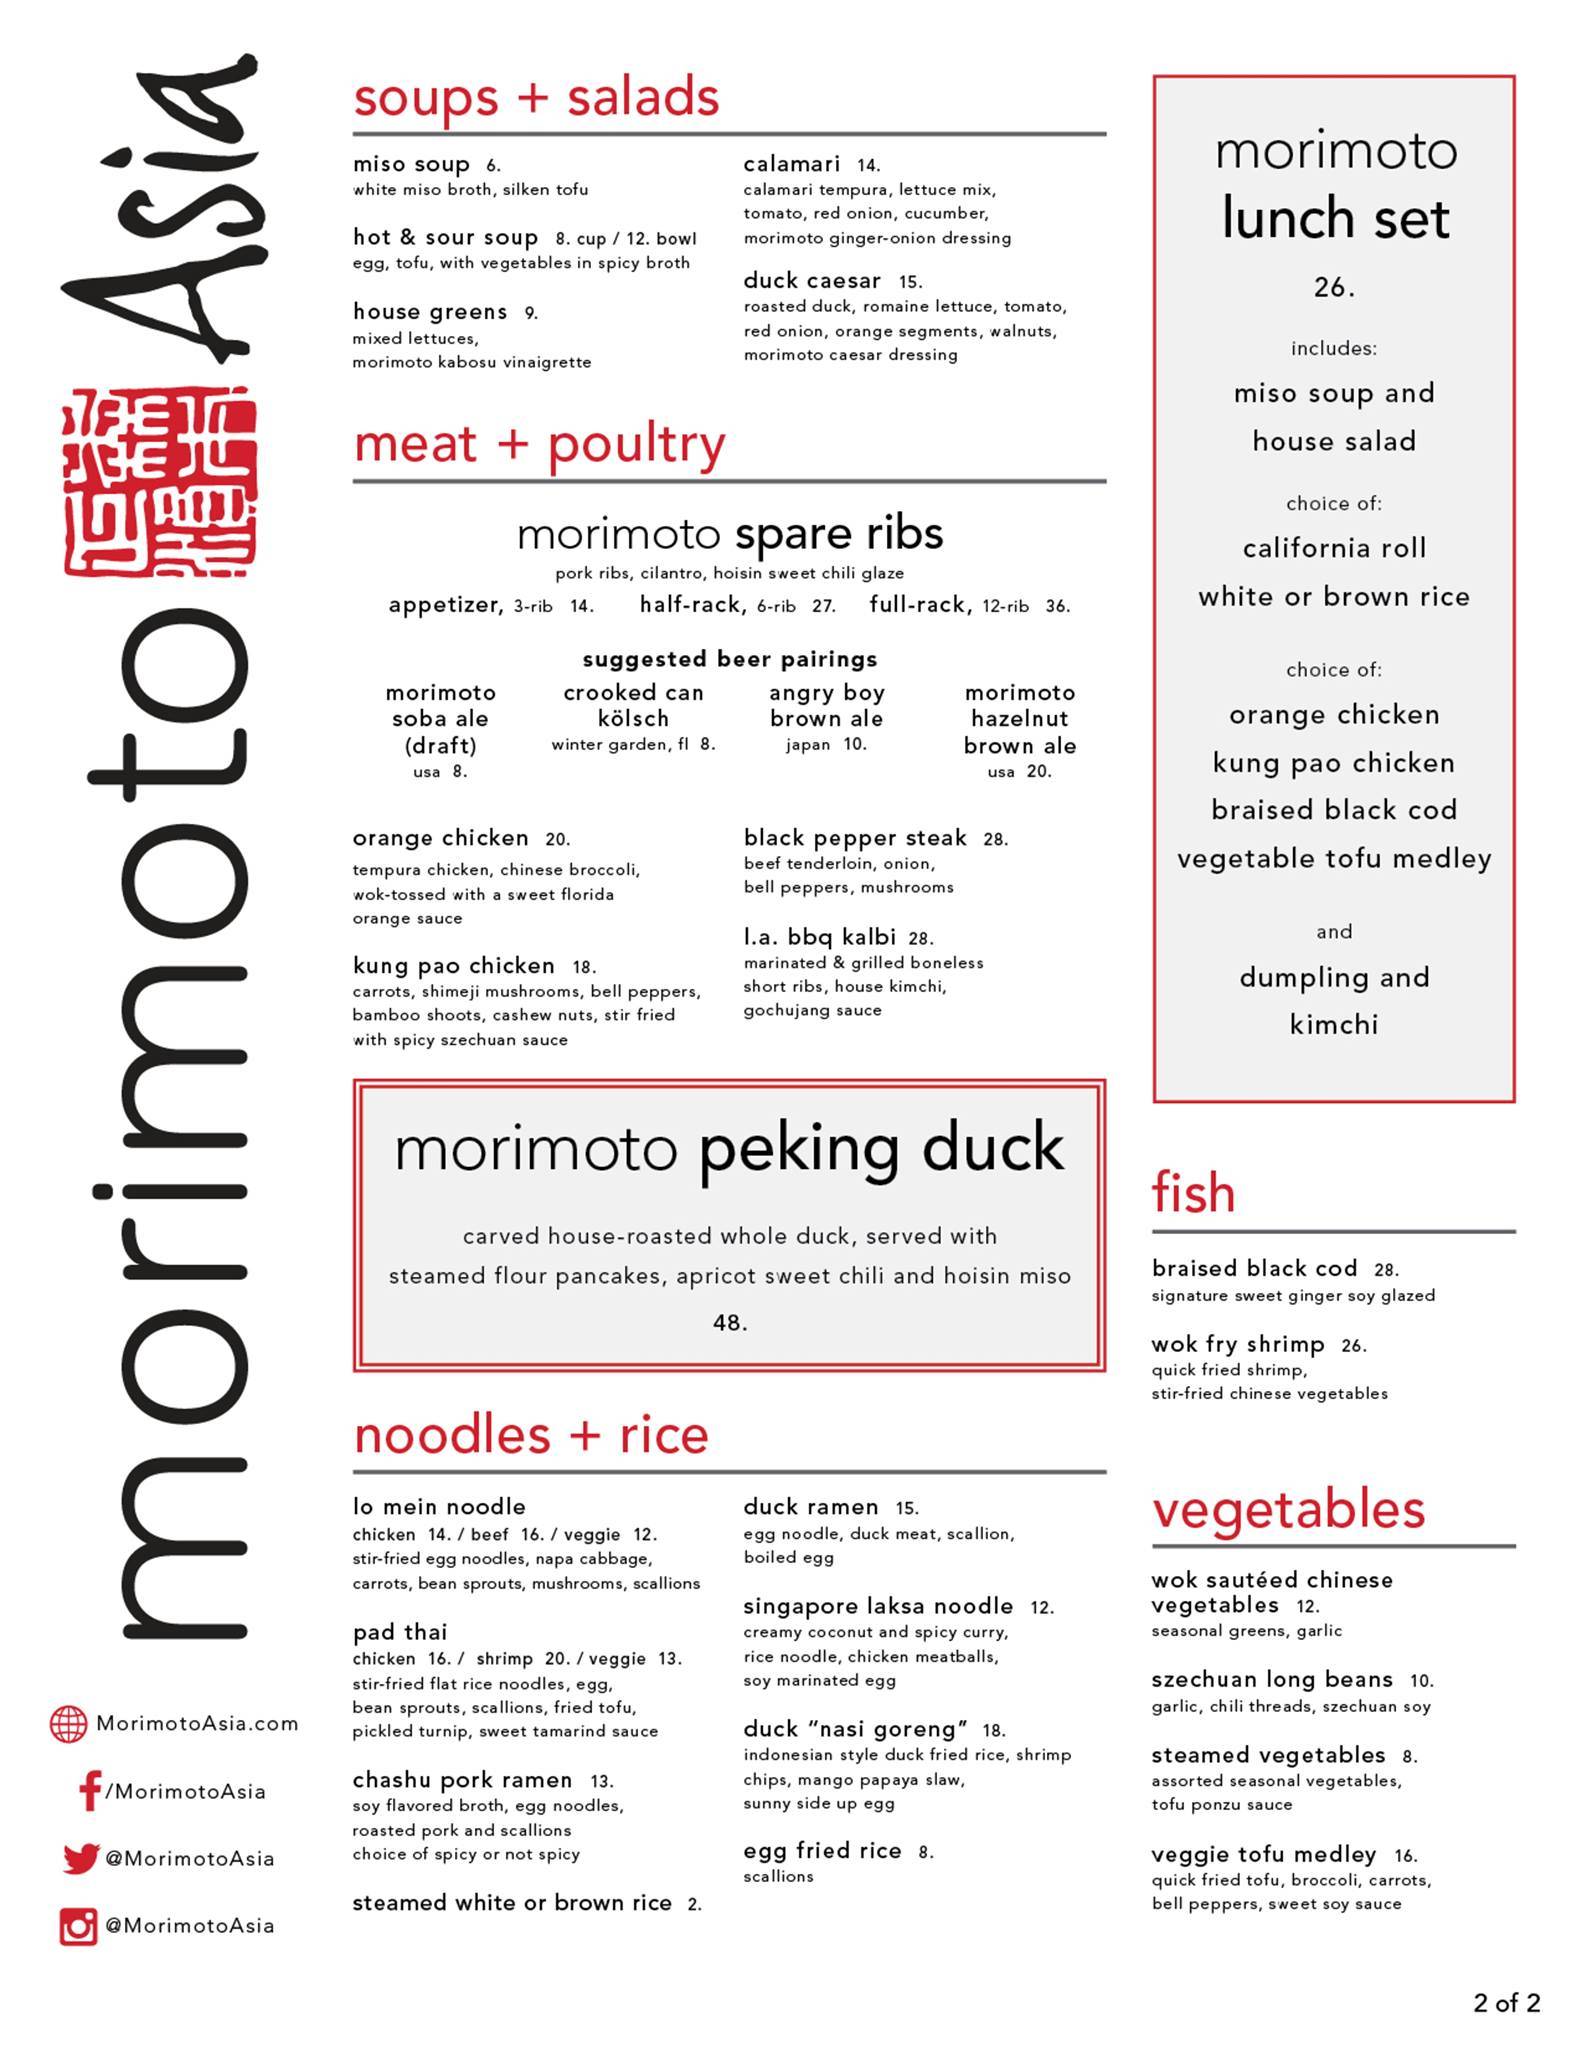 Morimoto Asia lunch menu - Page 2